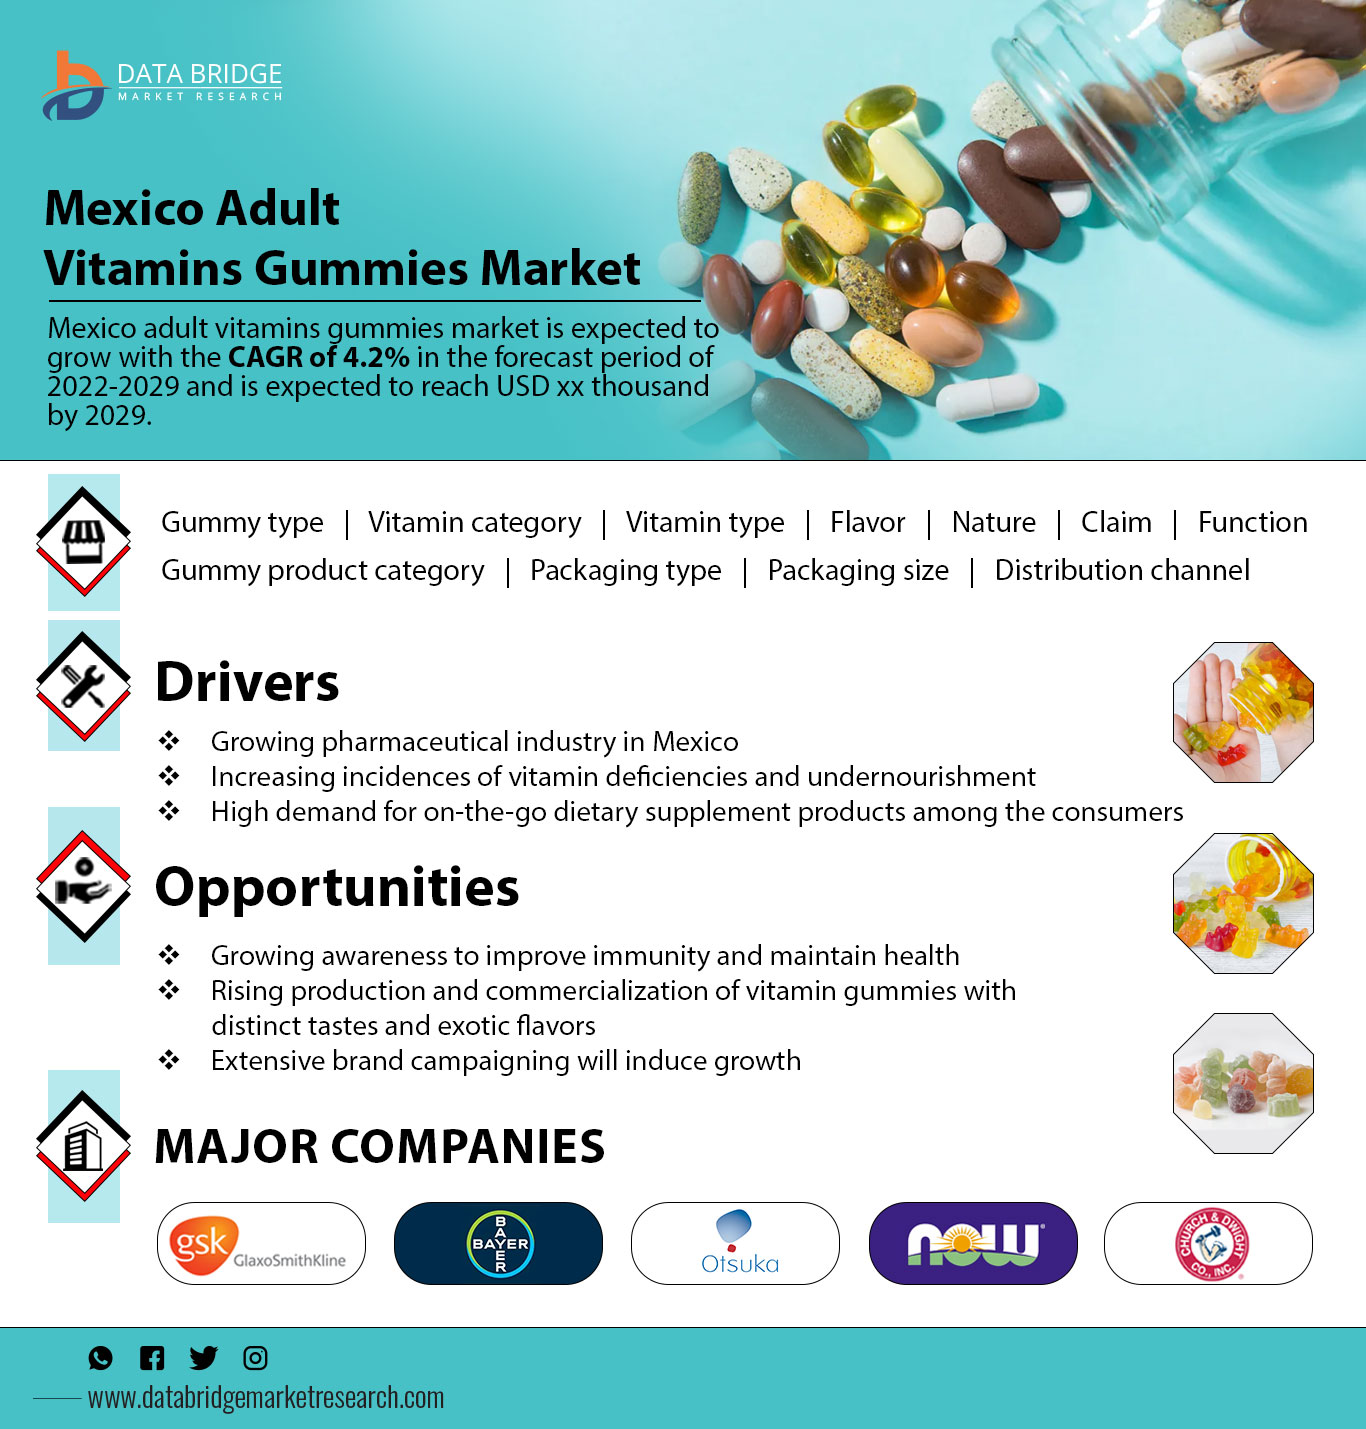 Mexico Adult Vitamin Gummies Market